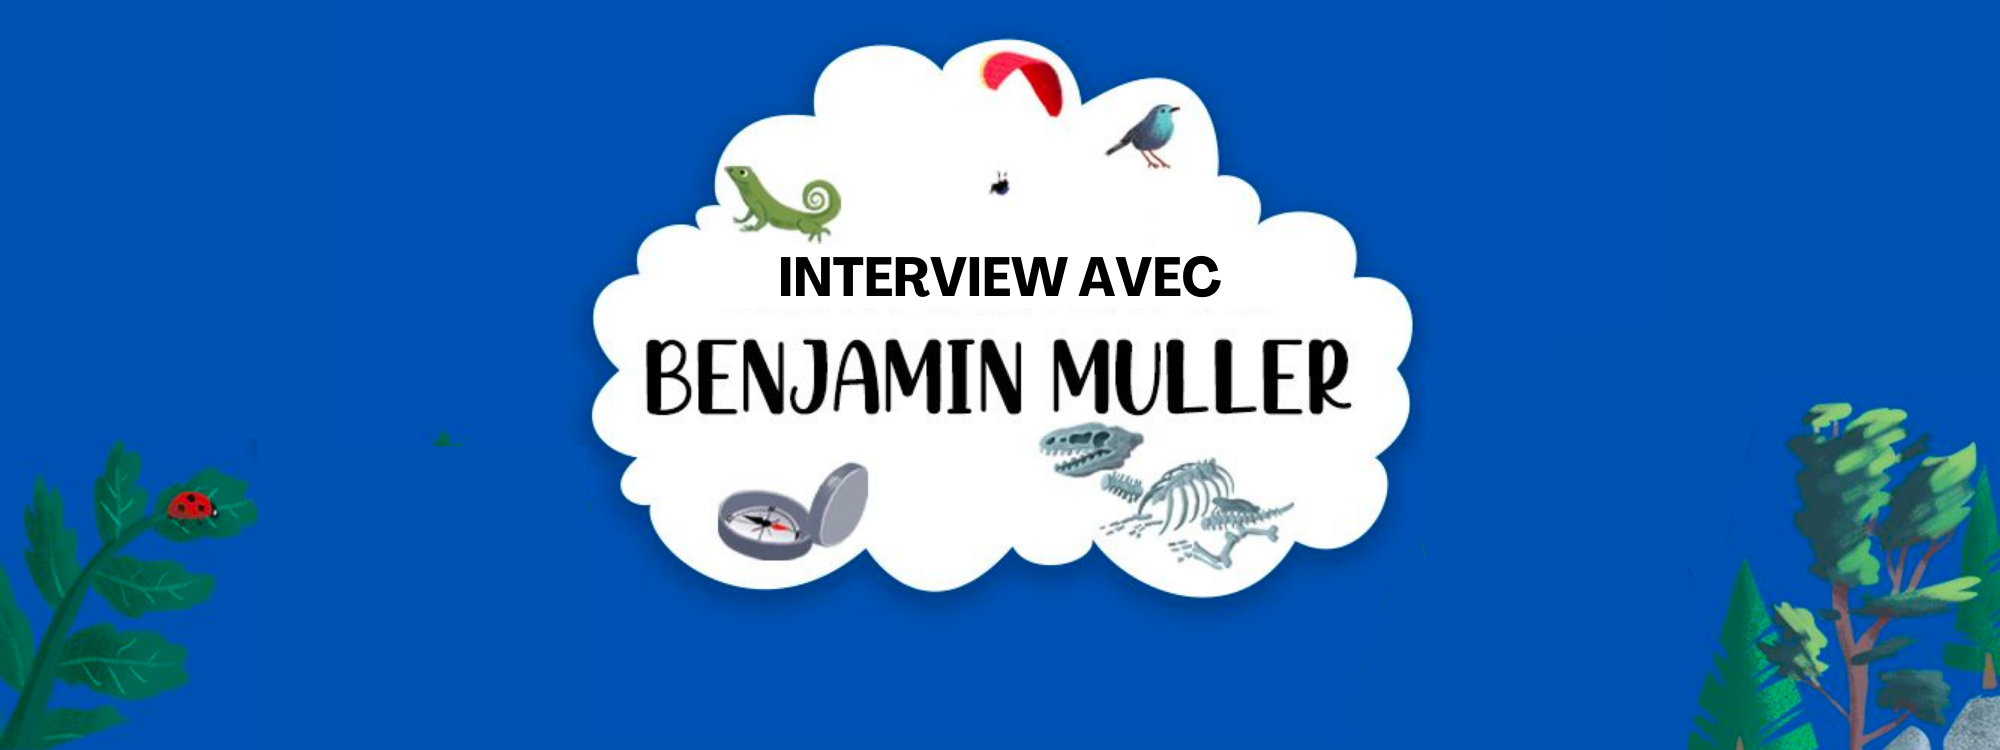 Deux minutes avec Benjamin Muller